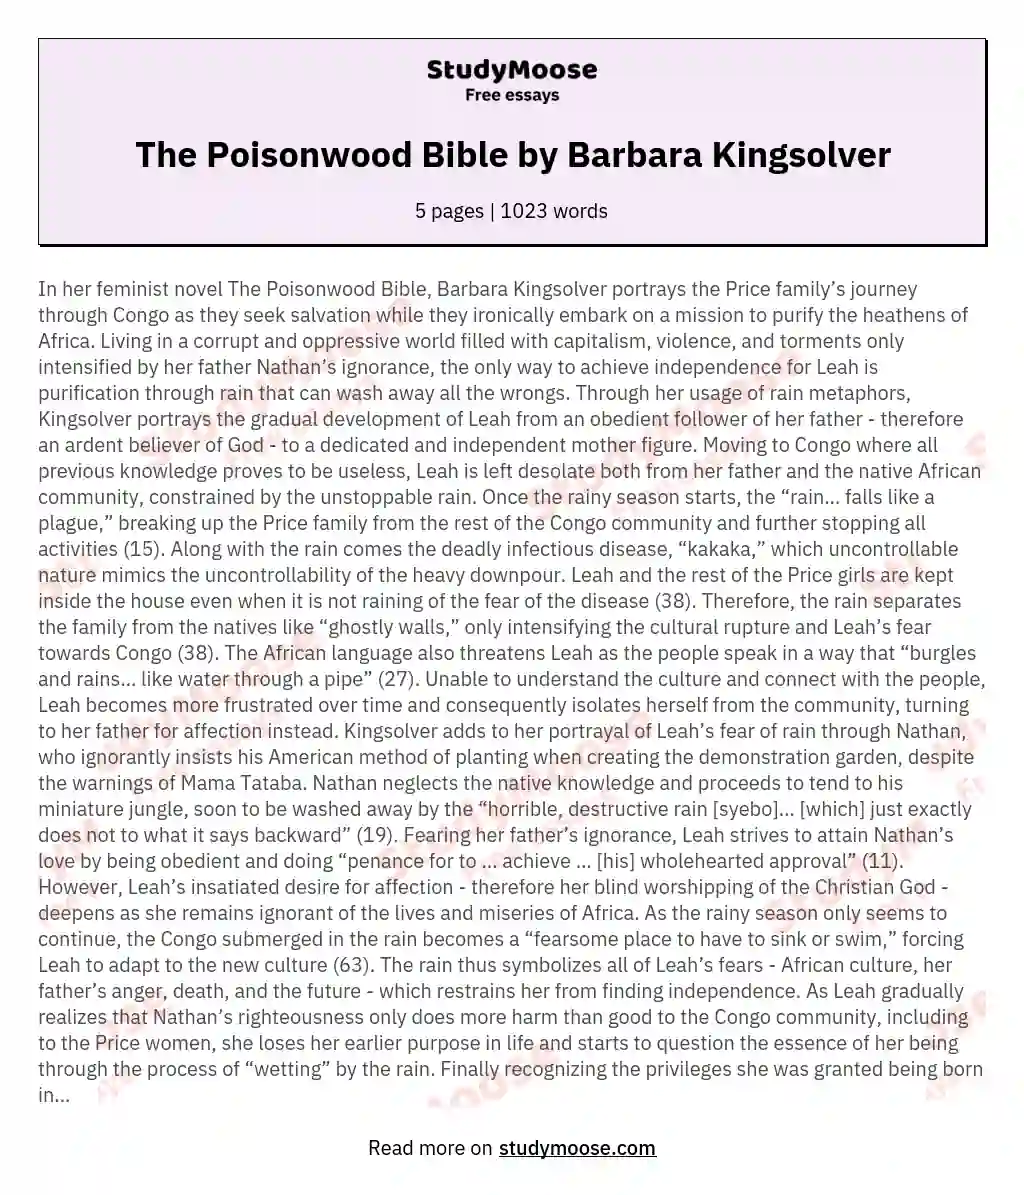 The Poisonwood Bible by Barbara Kingsolver essay